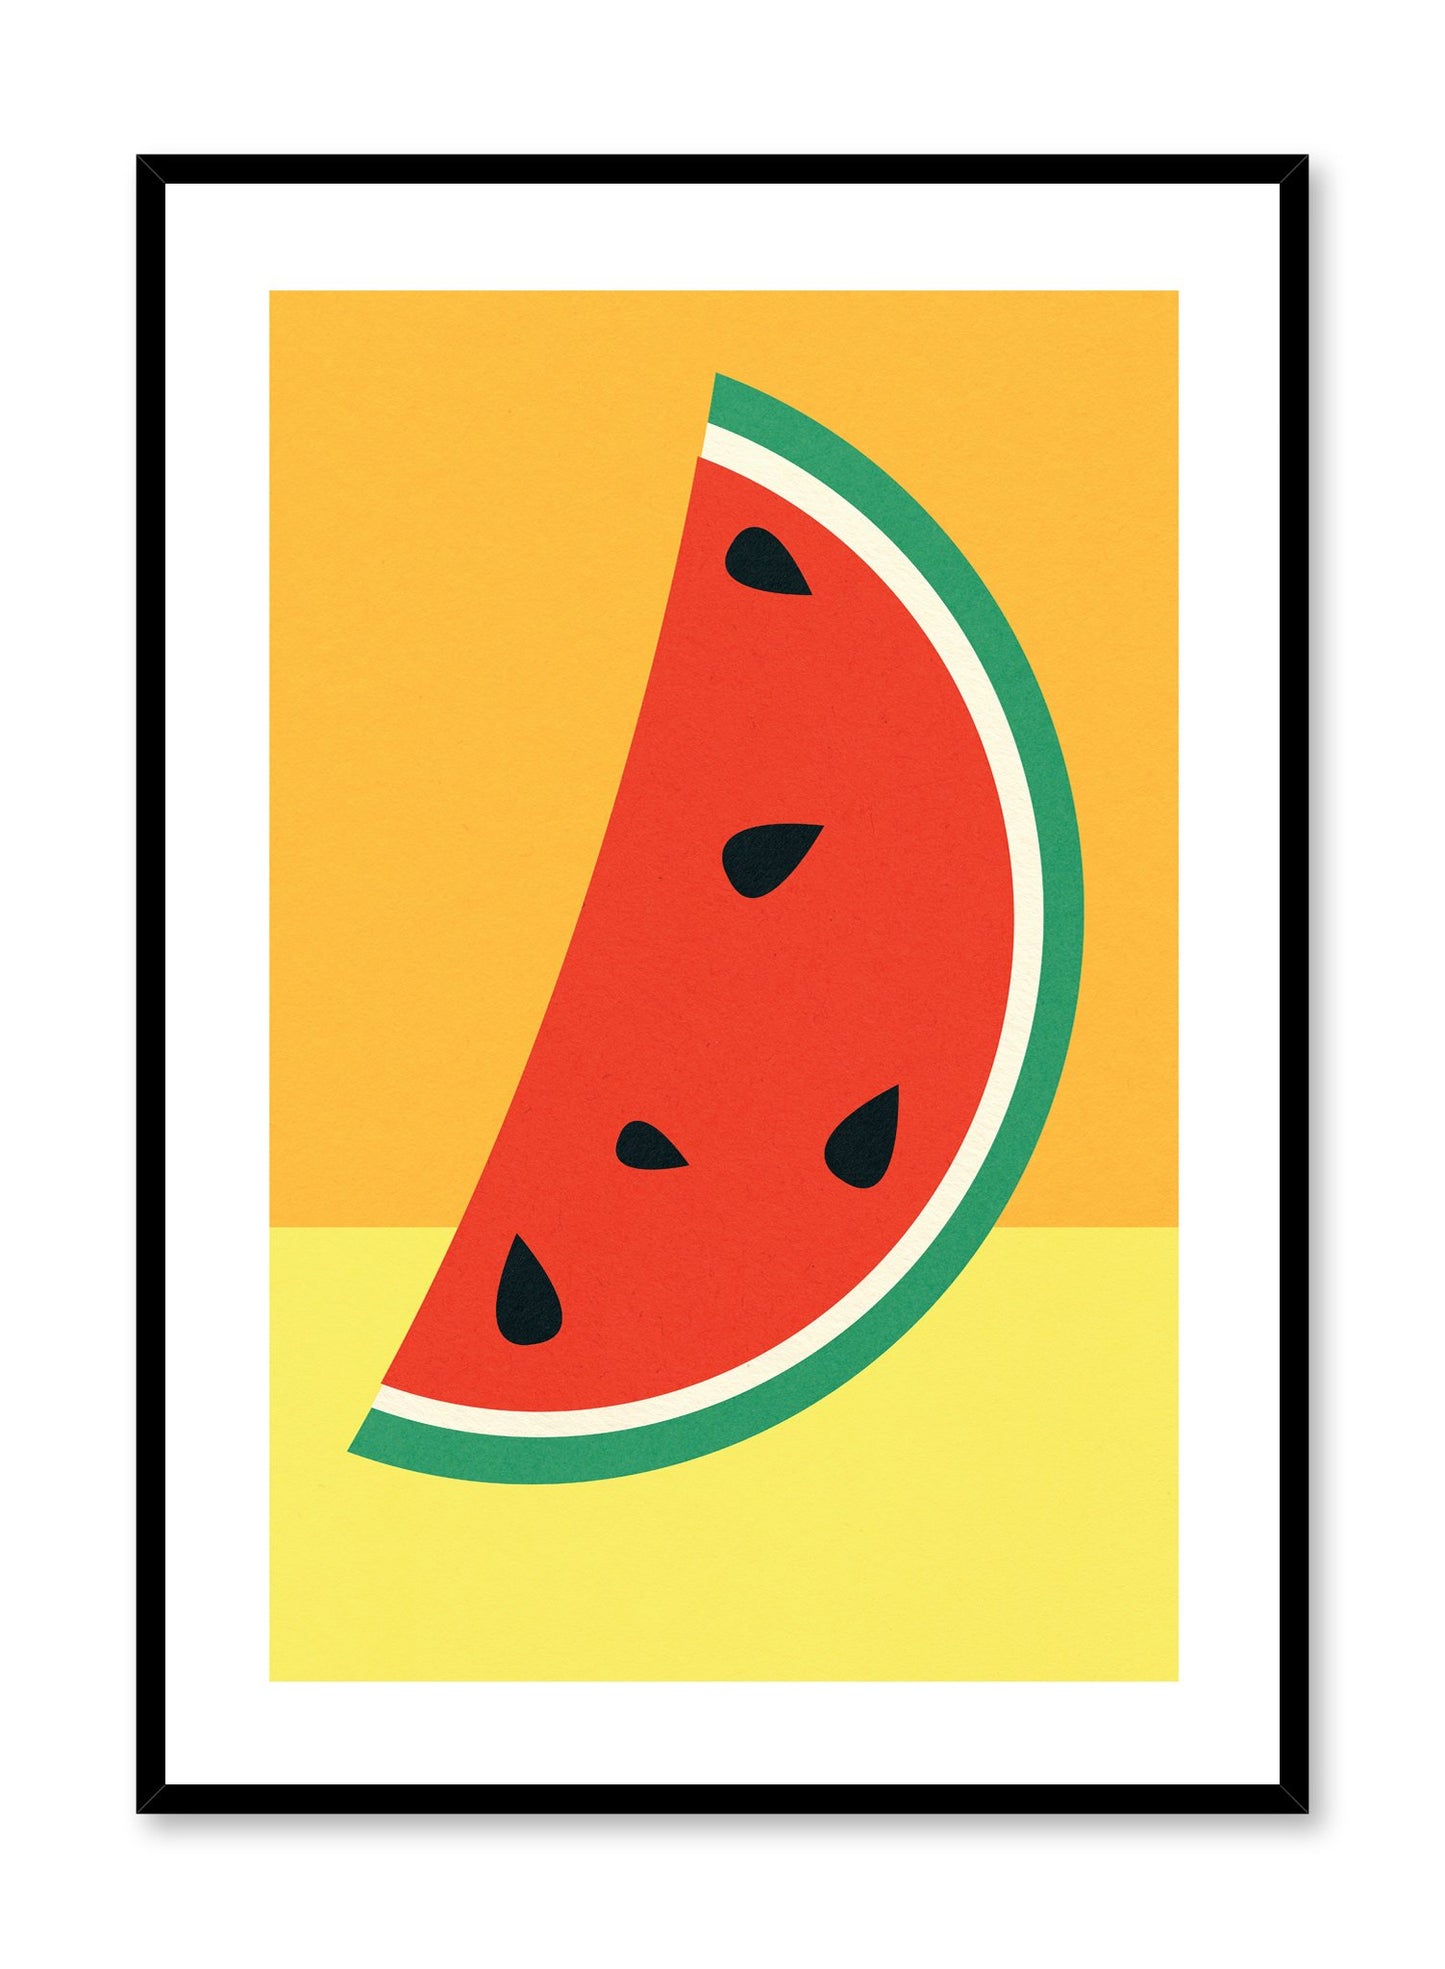 Minimalist pop art paper illustration by German artist Rosi Feist with group of watermelon slice